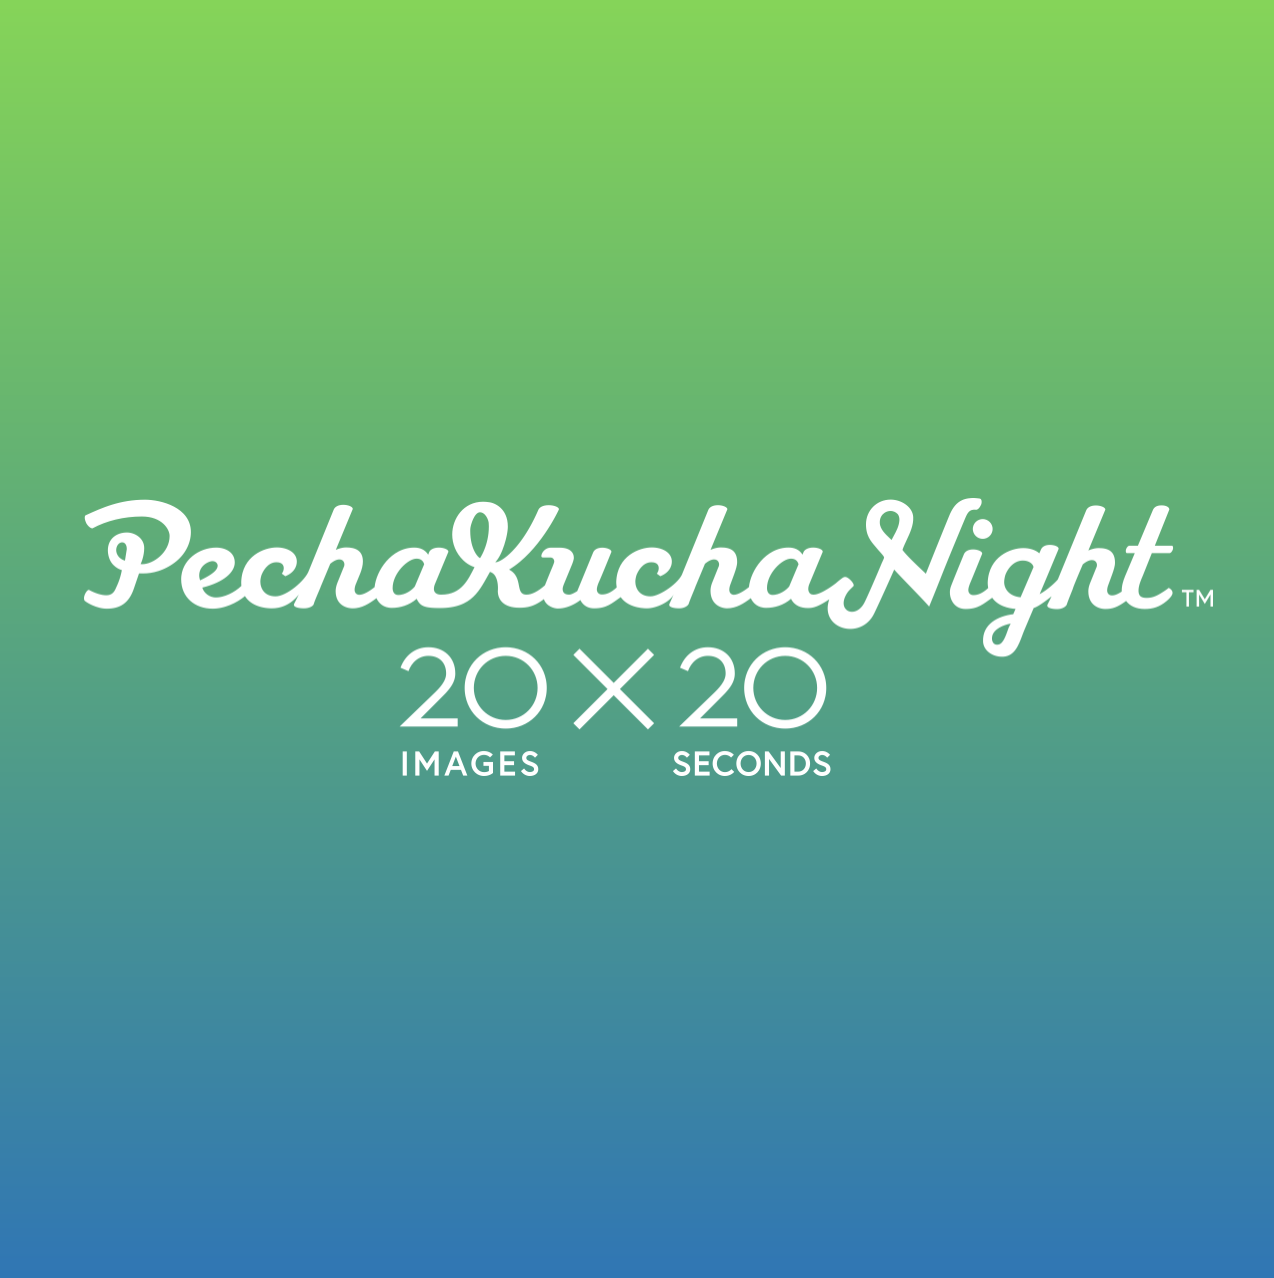 PechaKucha #61: 'Unstoppable'